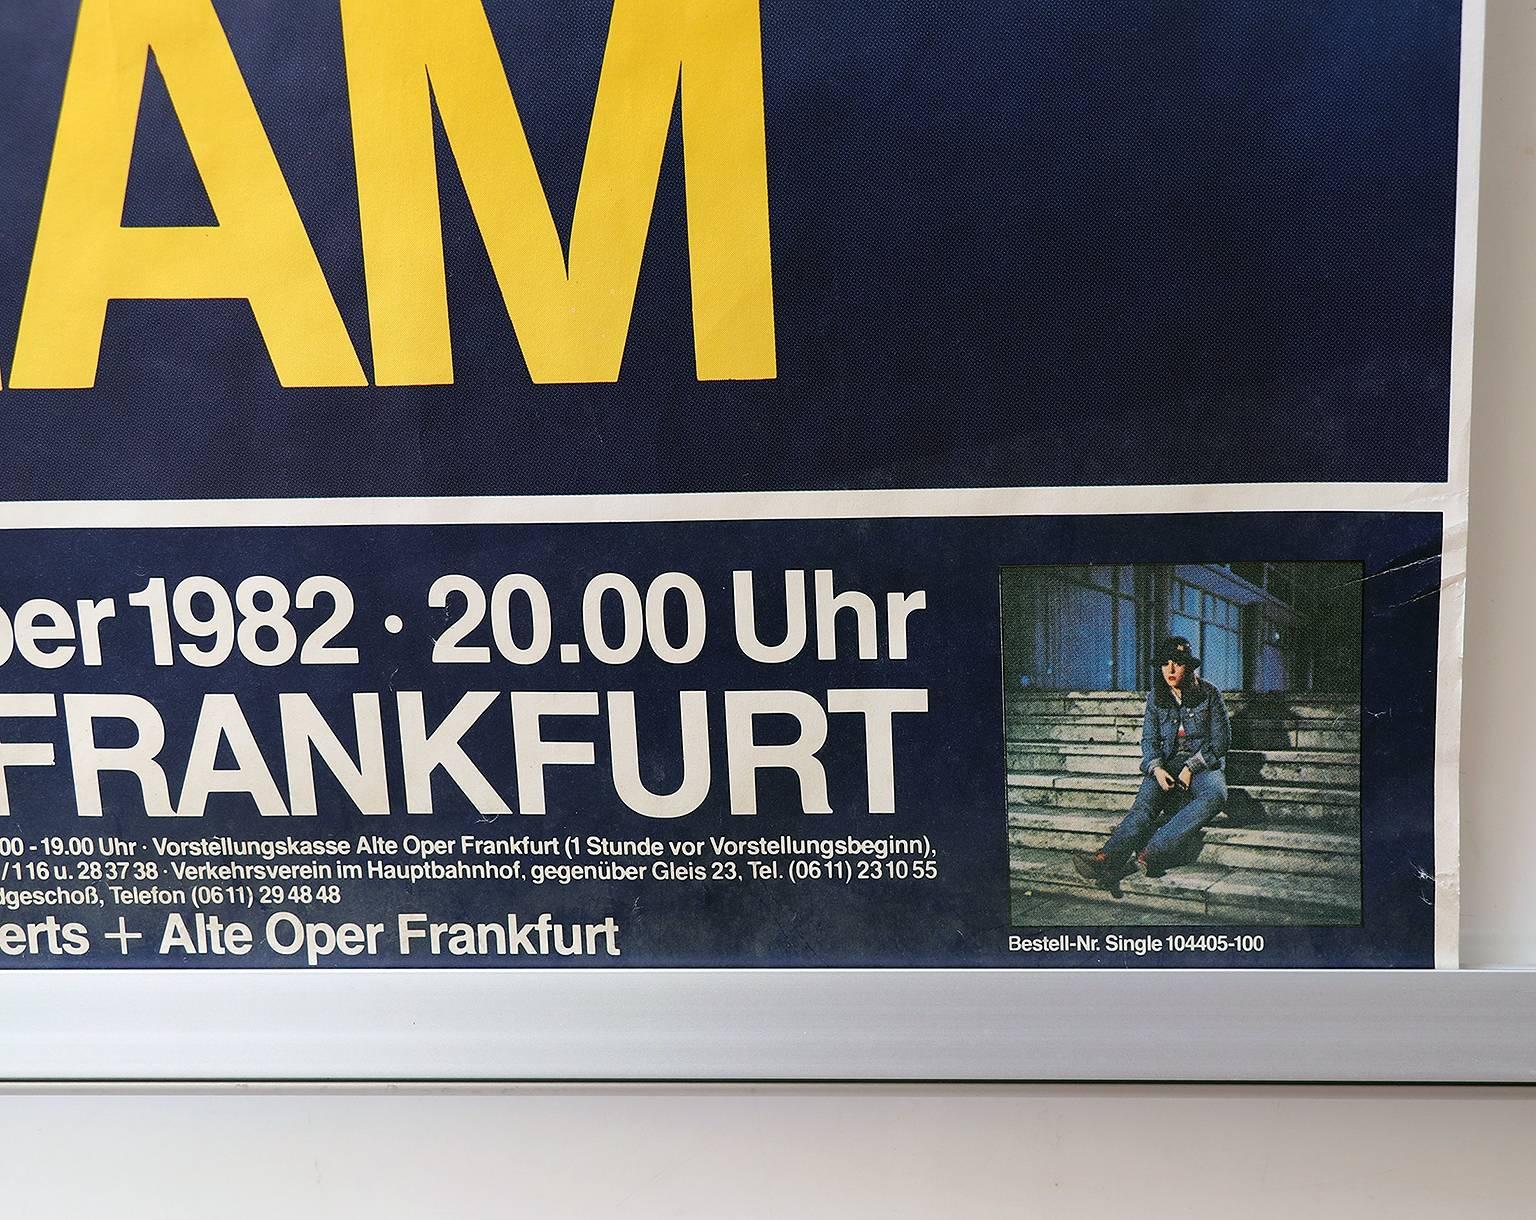 Tangerine Dream concert poster Alte Oper Frankfurt, 1982
Not framed, has not been folded, rolled up.
Size: 83.5 x 59.5 cm. 